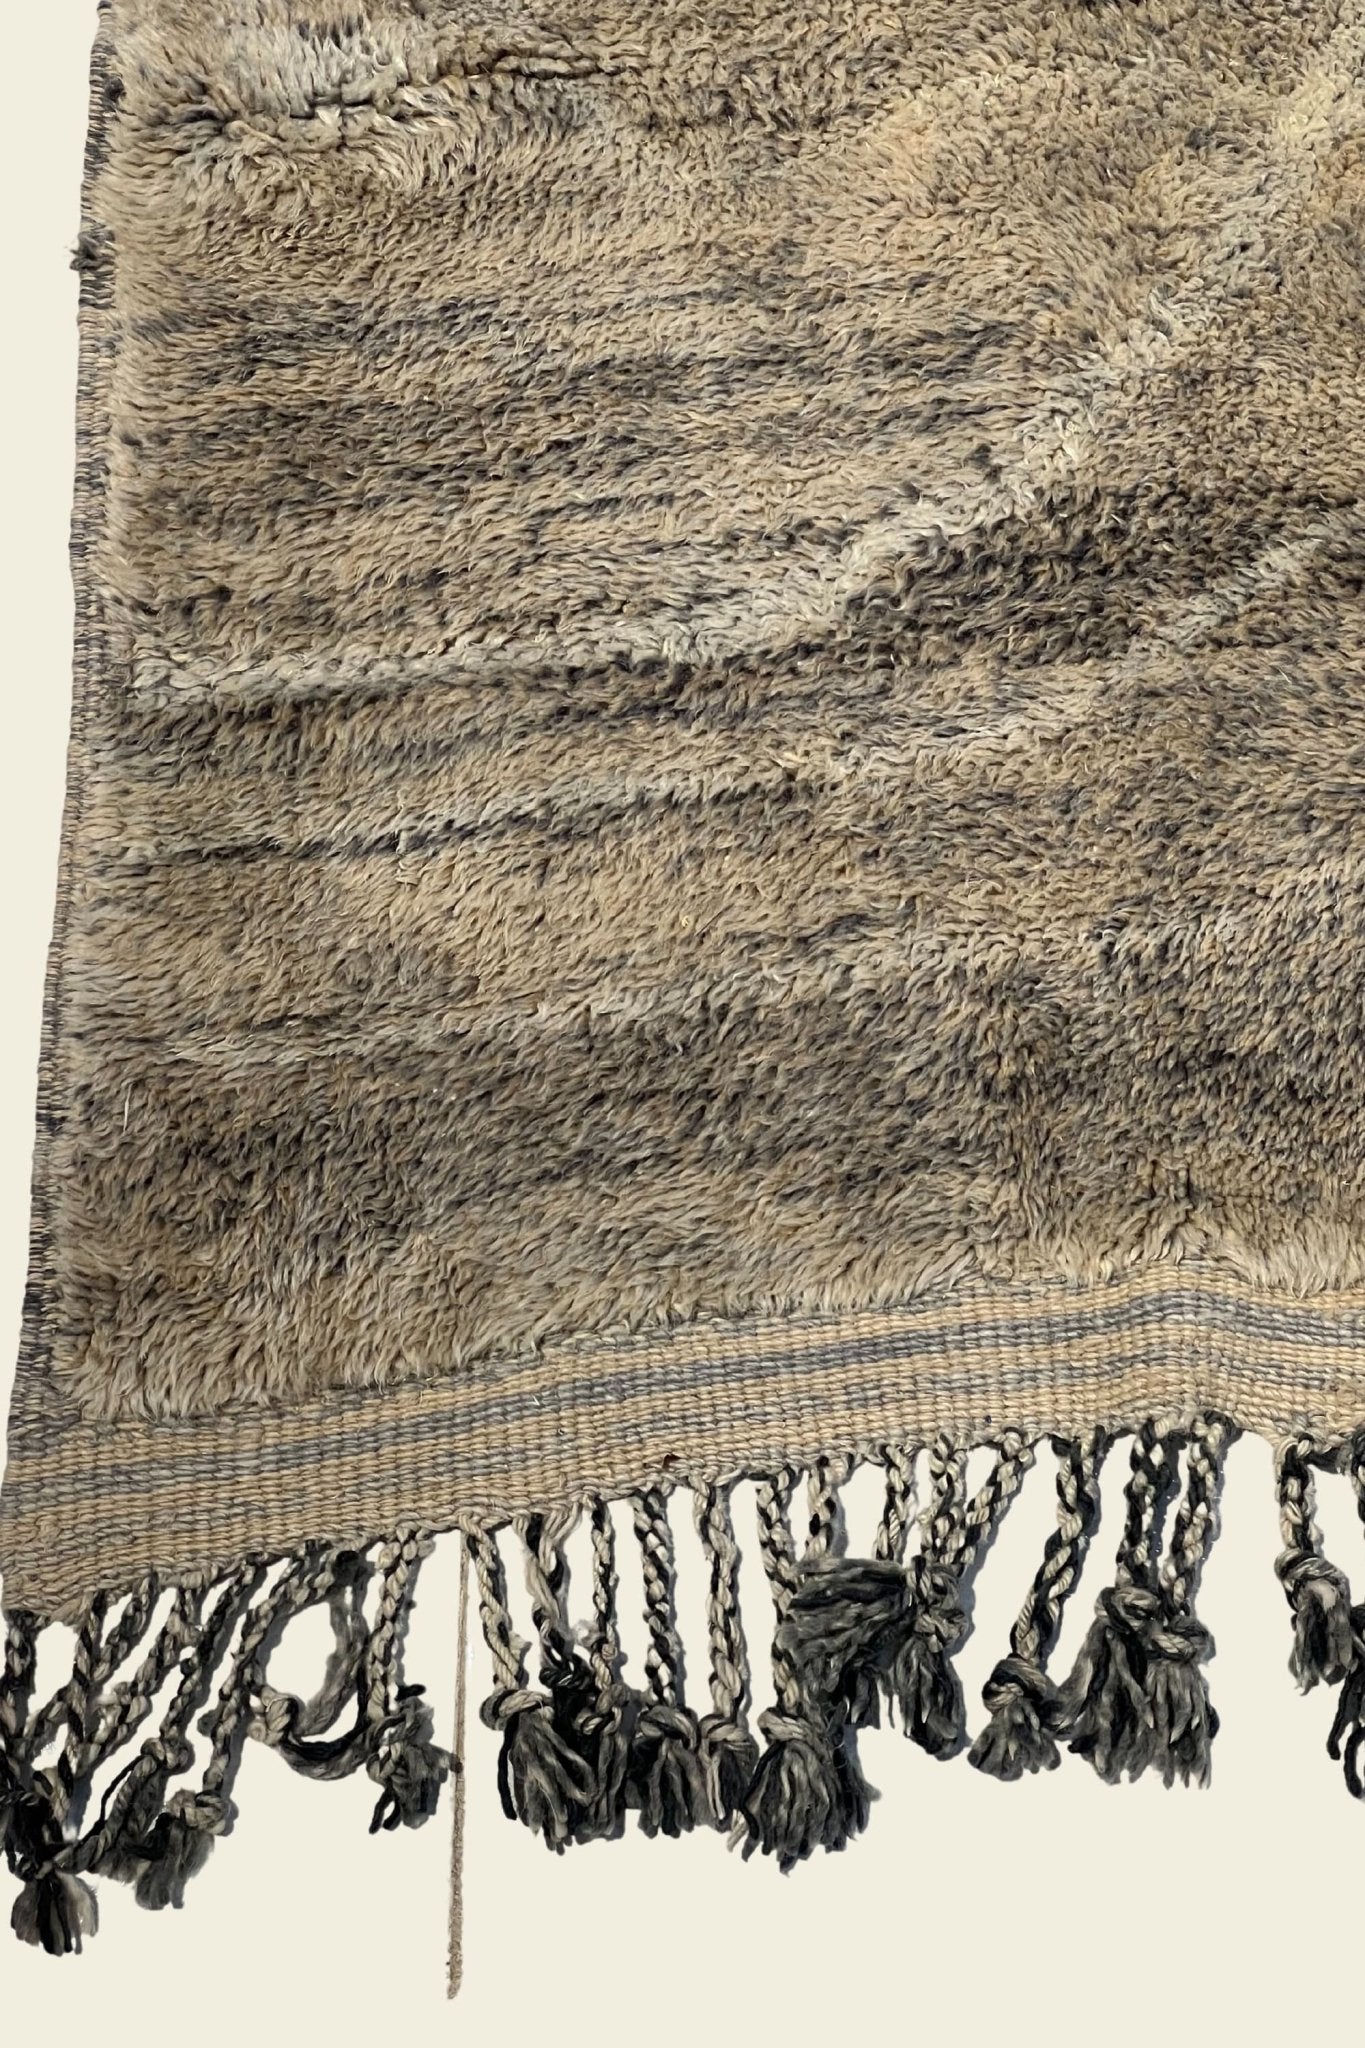 Contemporary Beni Mrirt Berber Rug 5'87" x 8'16" - 179 cm x 249 cm (Wool) - Dar Bouchaib Marrakech